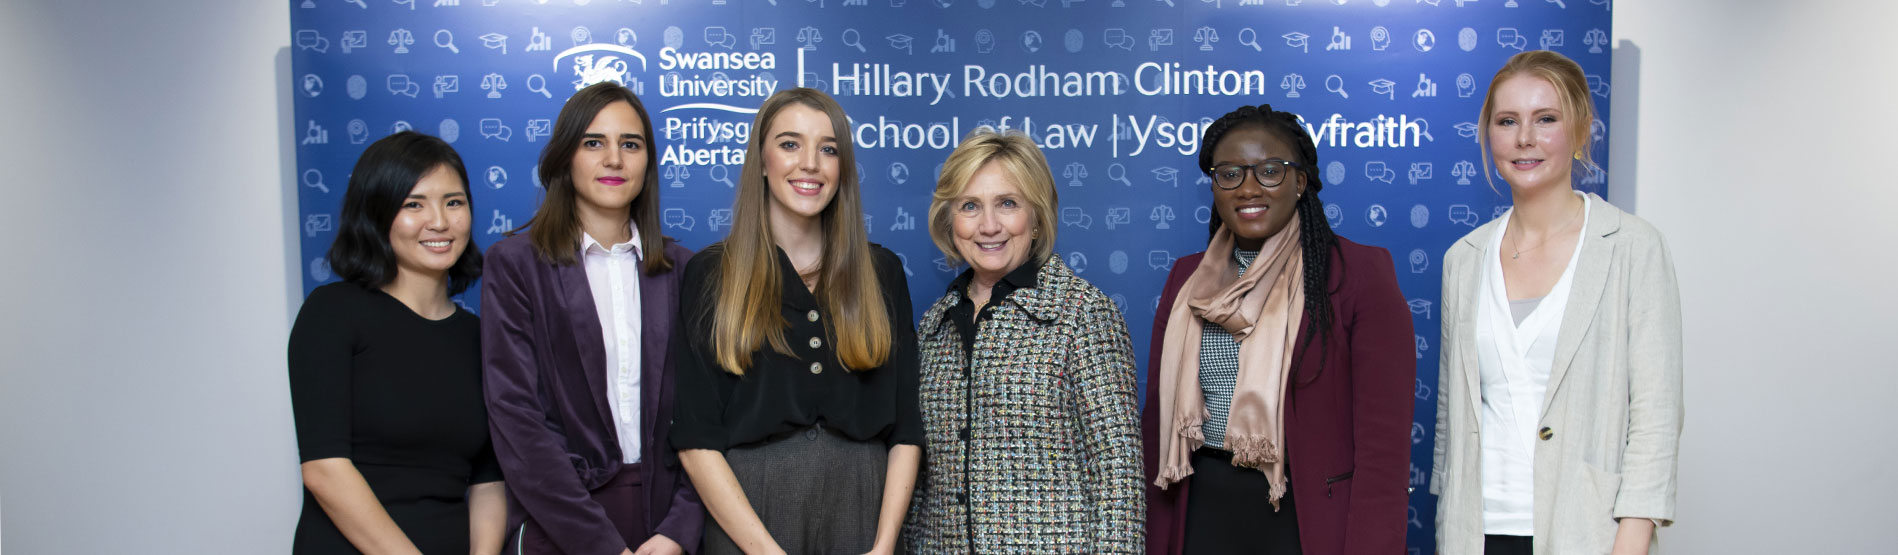 Clinton Scholars with Hillary Clinton